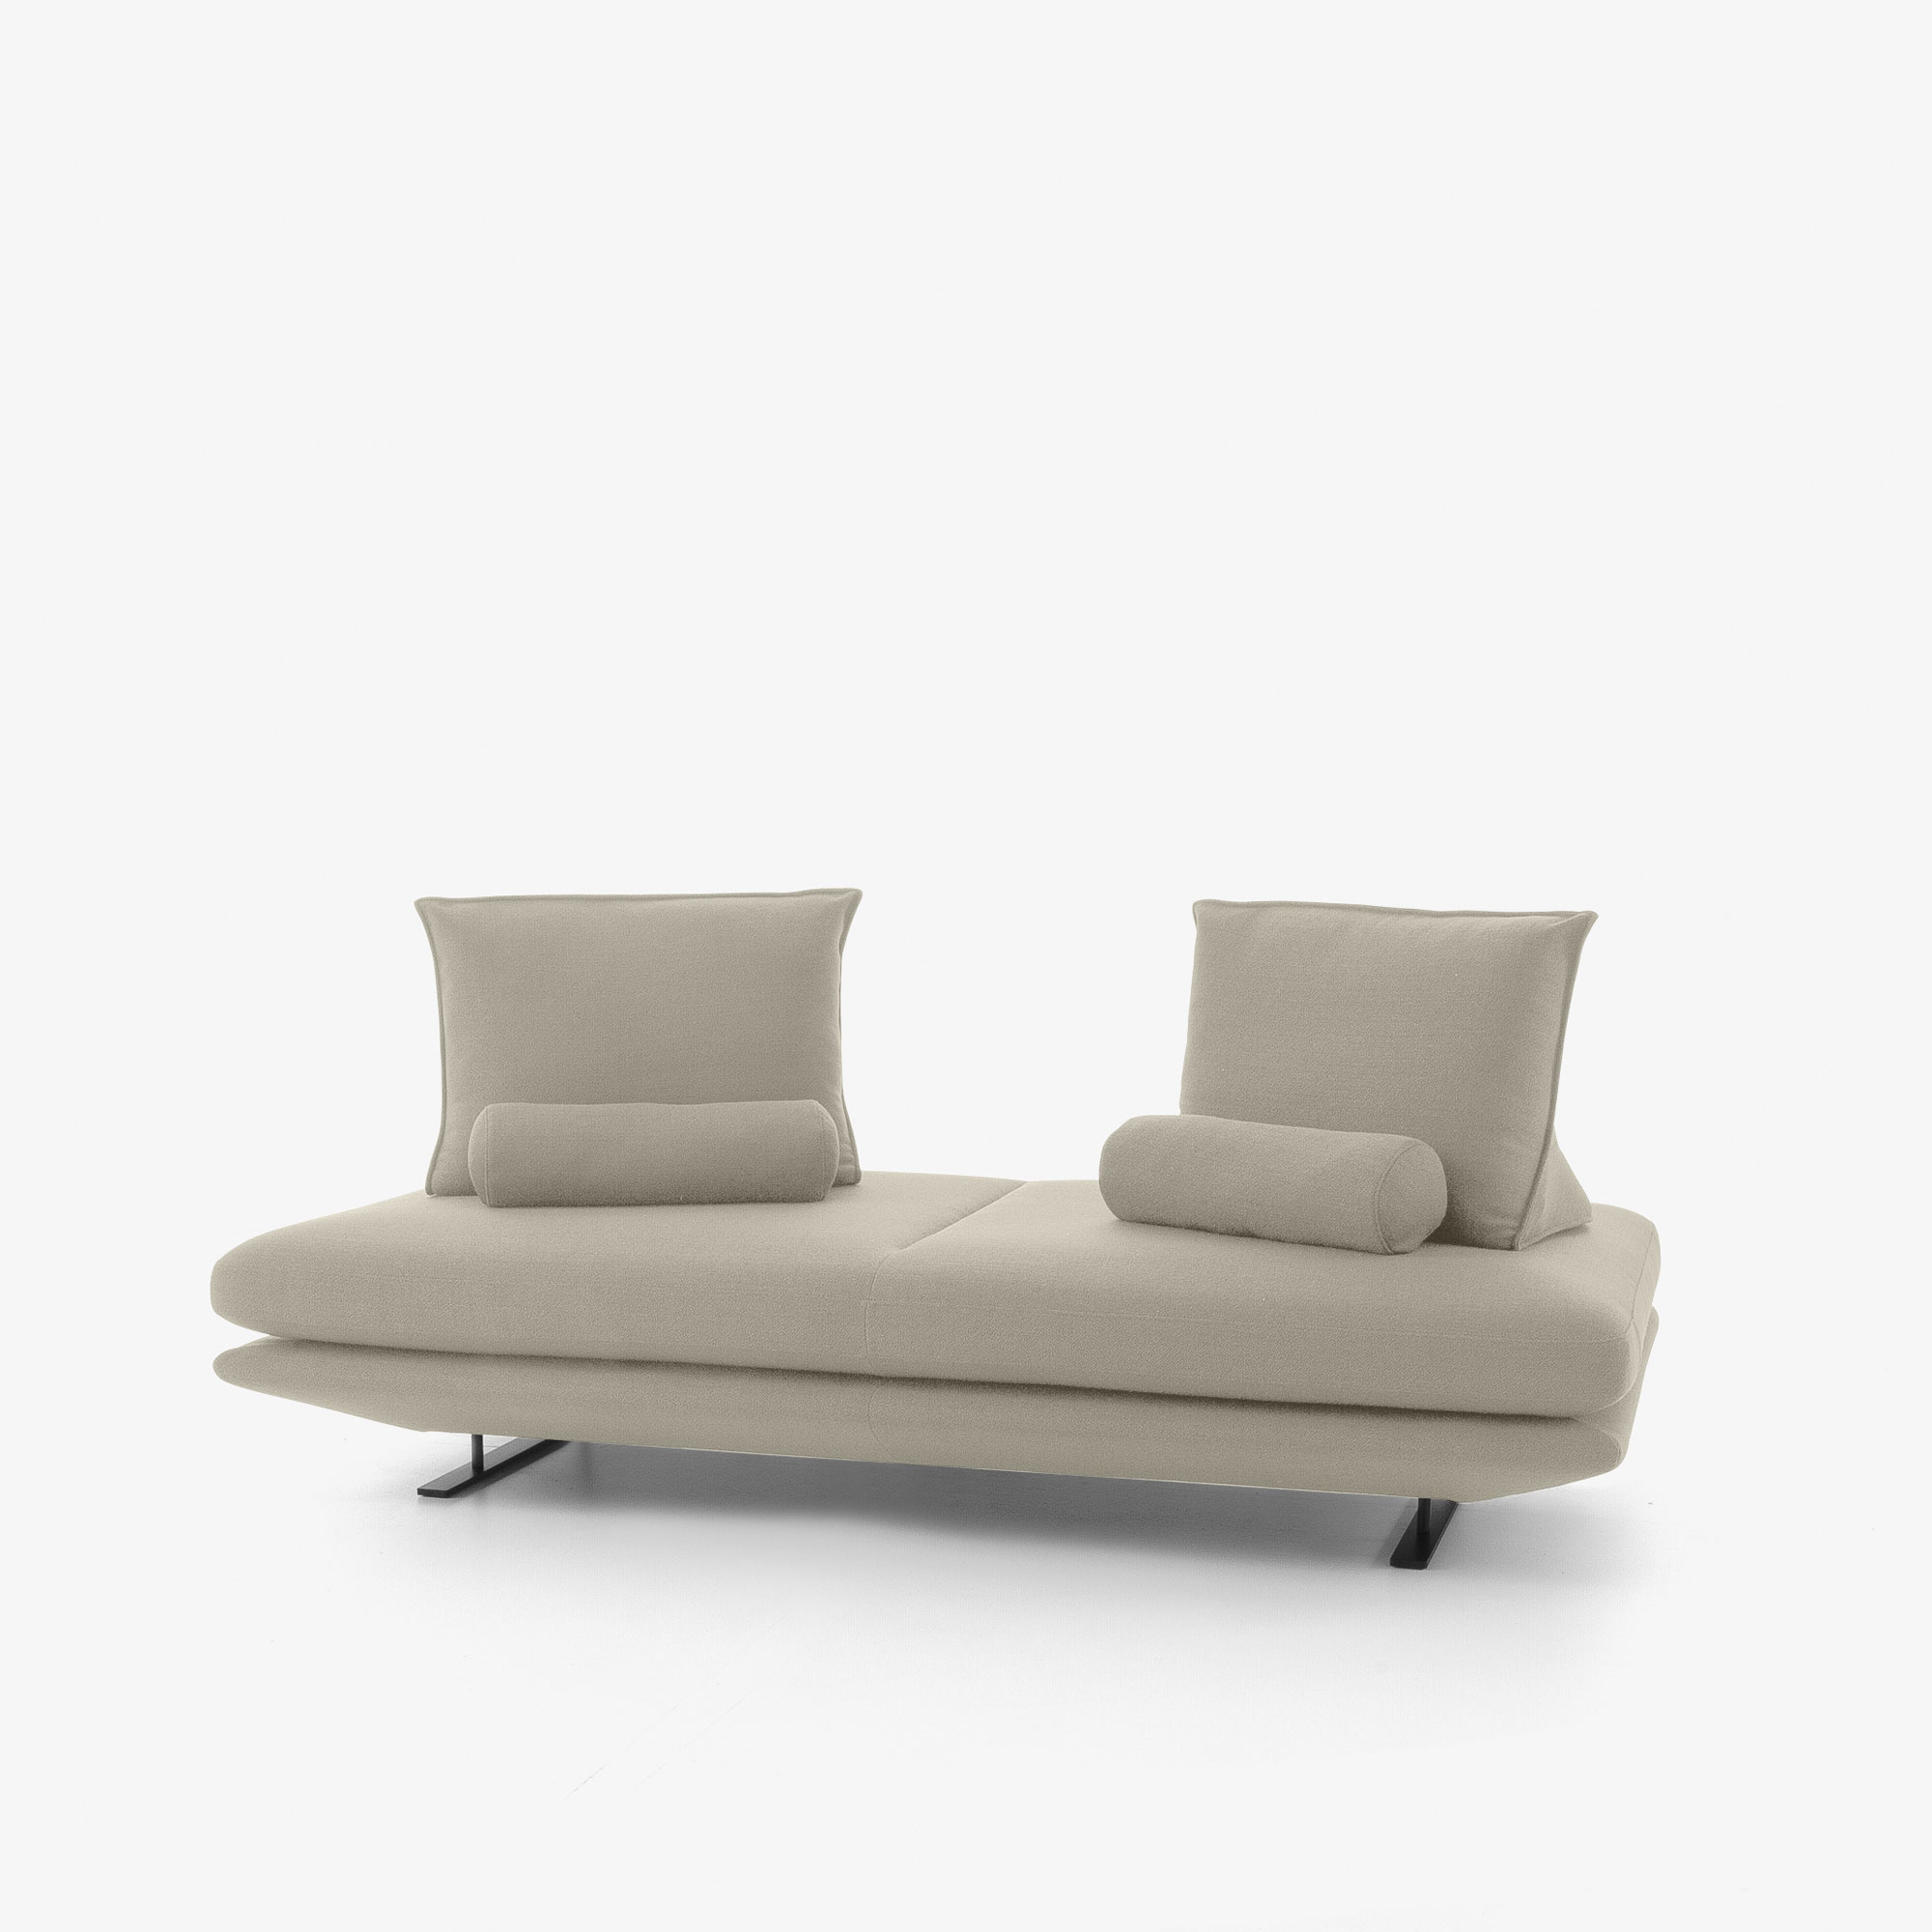 Upholstery Prado Medium settee - d 100 complete item - Ligne Roset